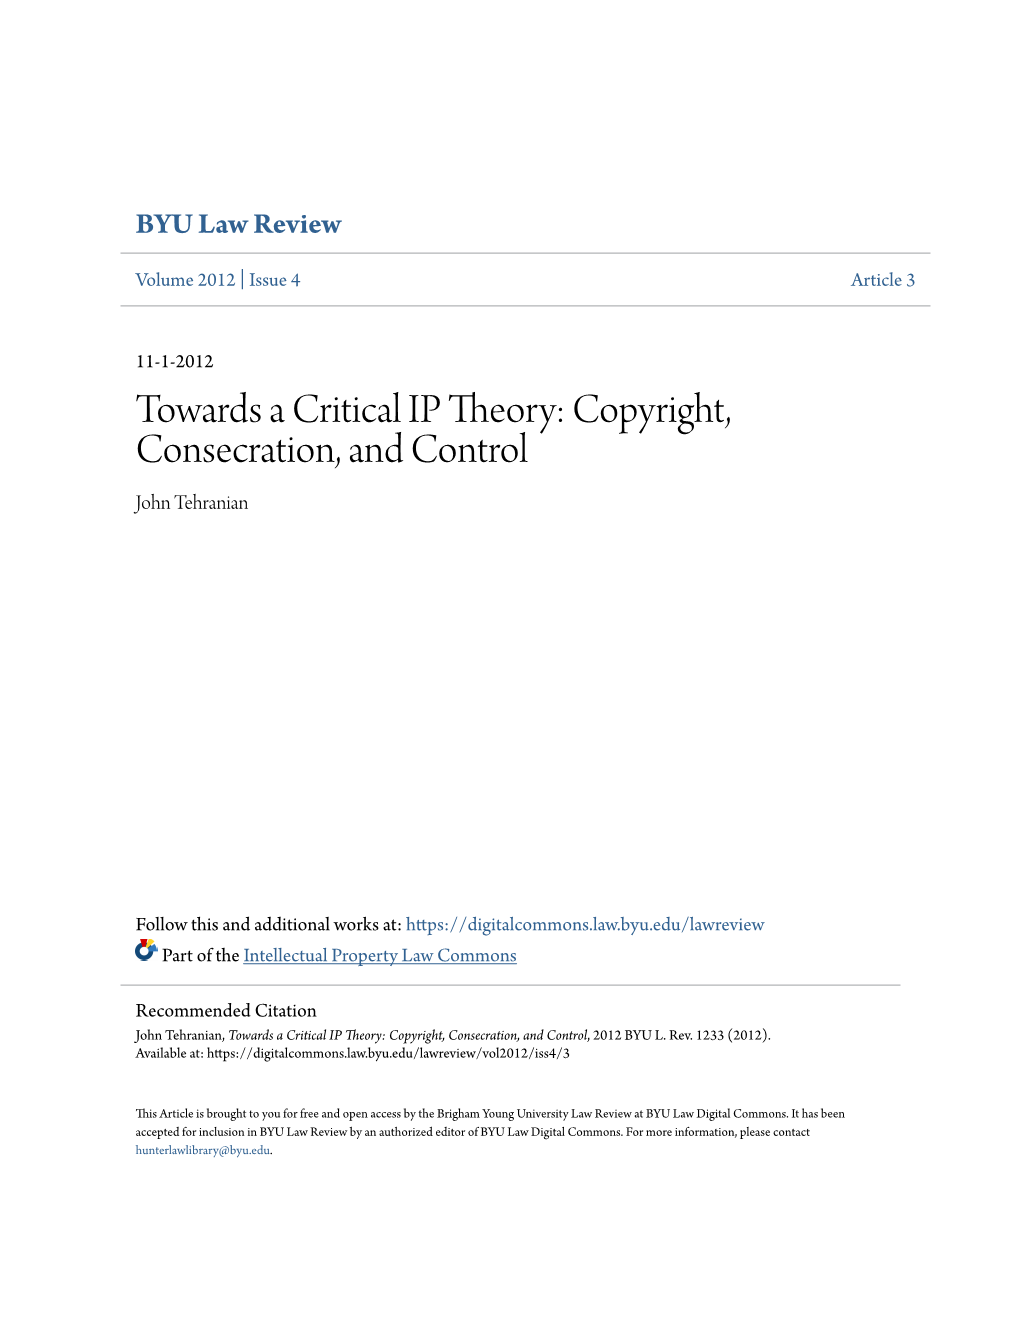 Towards a Critical IP Theory: Copyright, Consecration, and Control John Tehranian